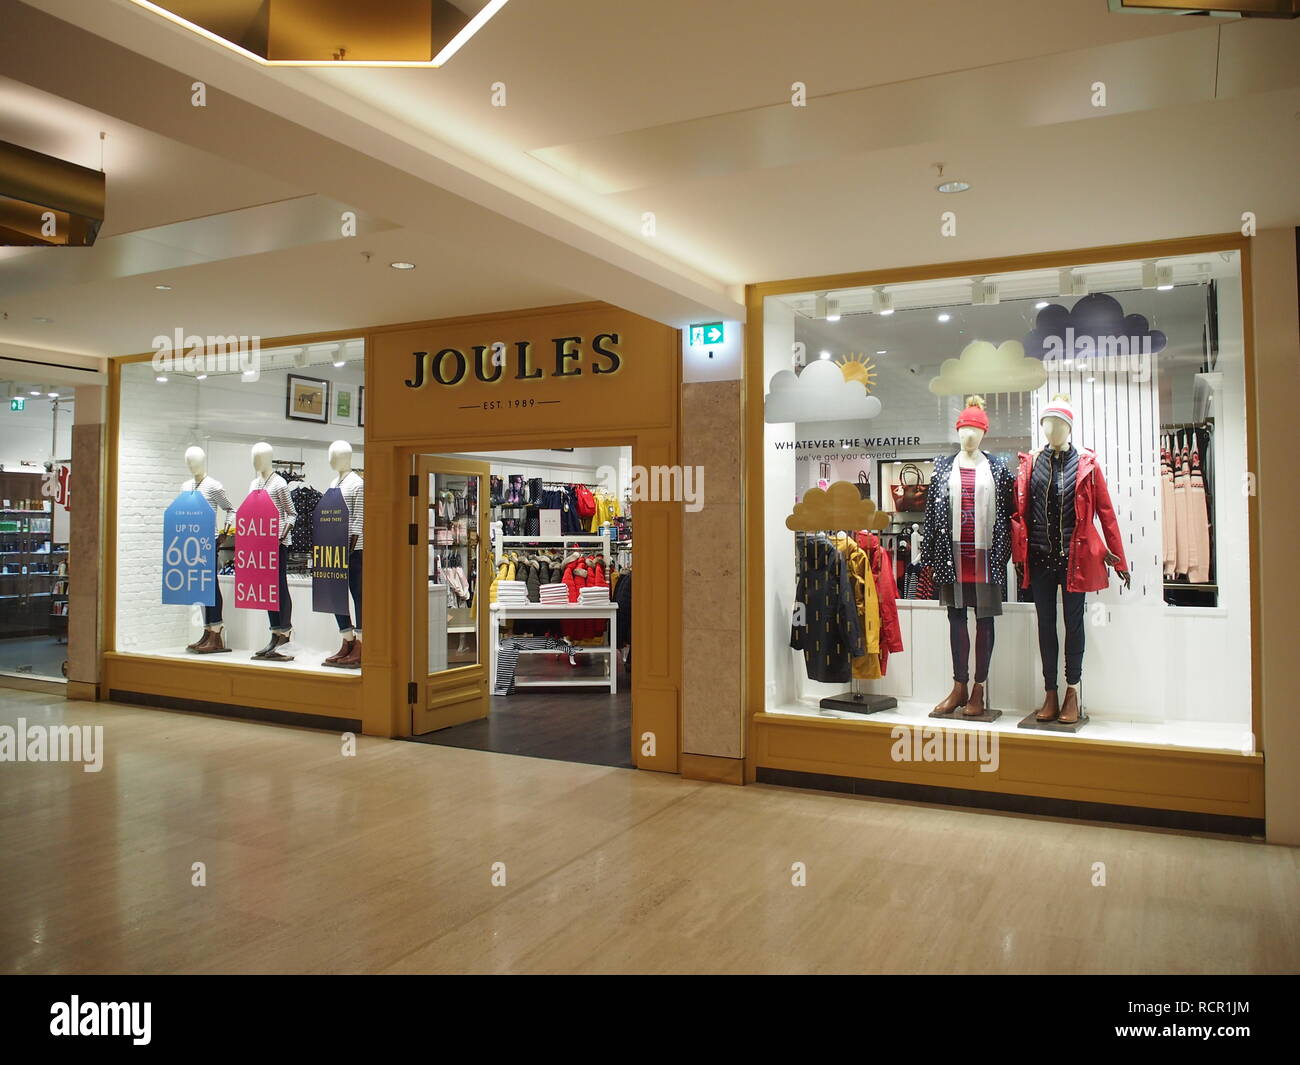 Joules womenswear shop in Milton Keynes shopping centre Stock Photo - Alamy